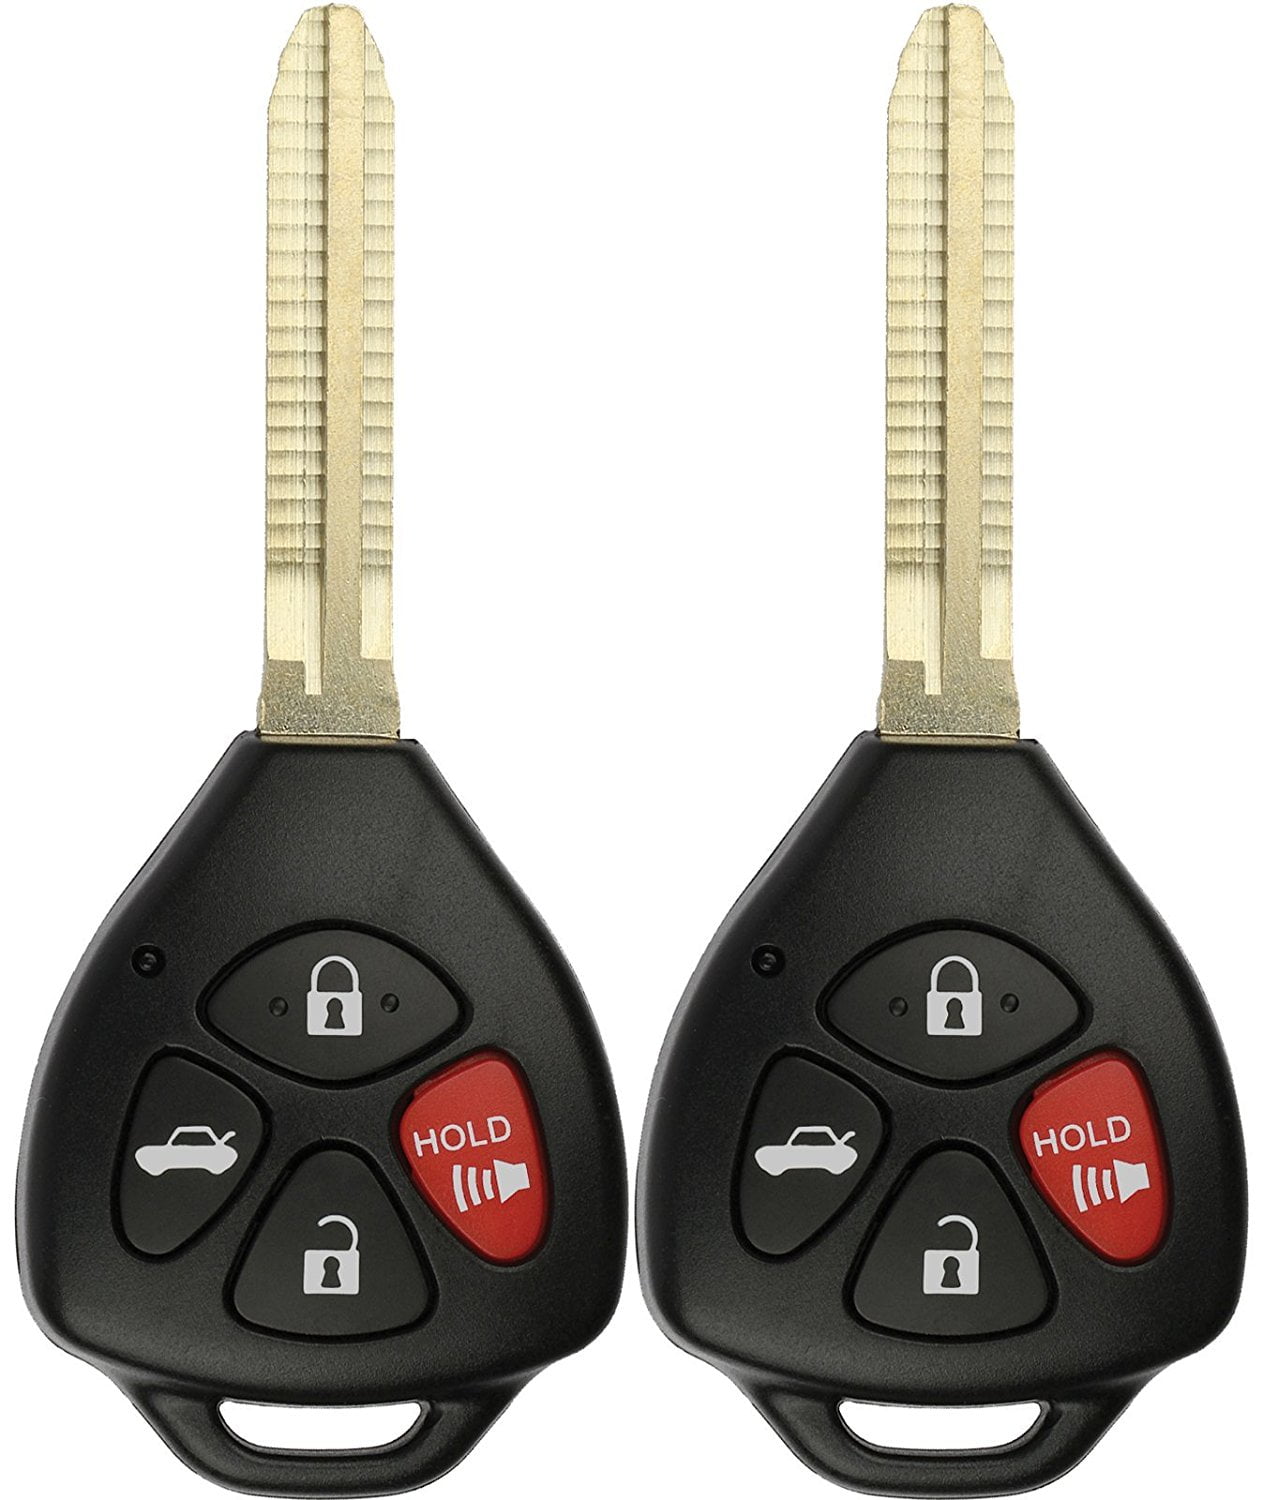 Car Key Fob Keyless Entry Remote fits Toyota 2010-2013 Corolla 2009-2016 Venza GQ4-29T, 1470A-10T, 89070-02270 Set of 2 